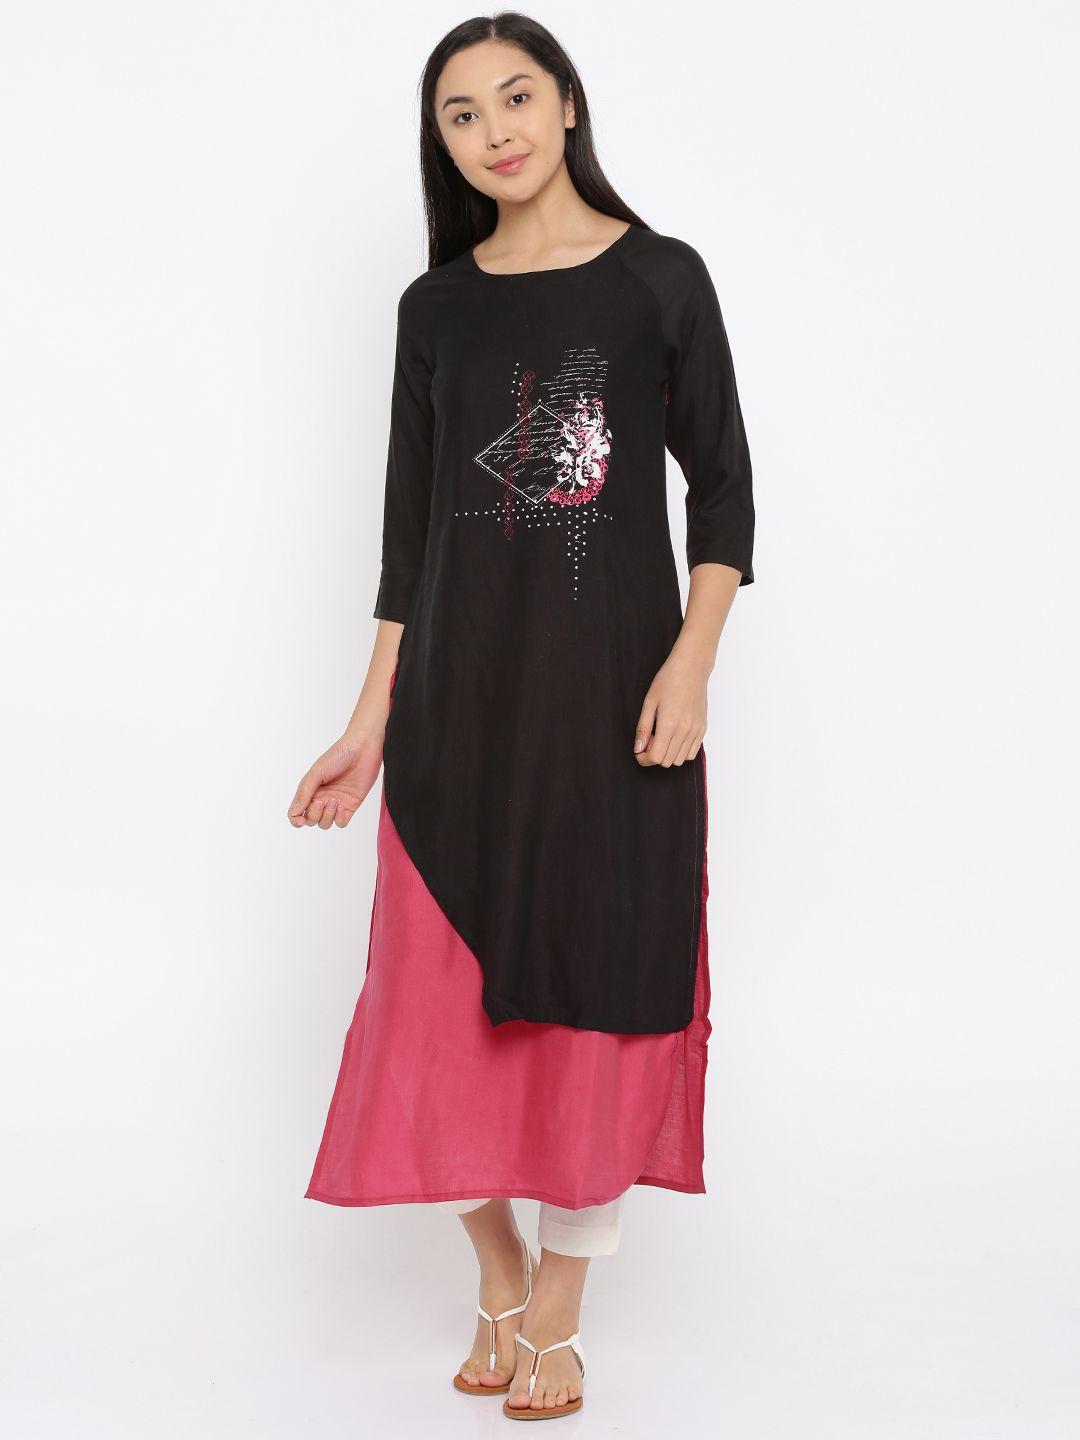 rangmanch by pantaloons women black & pink printed a-line kurta